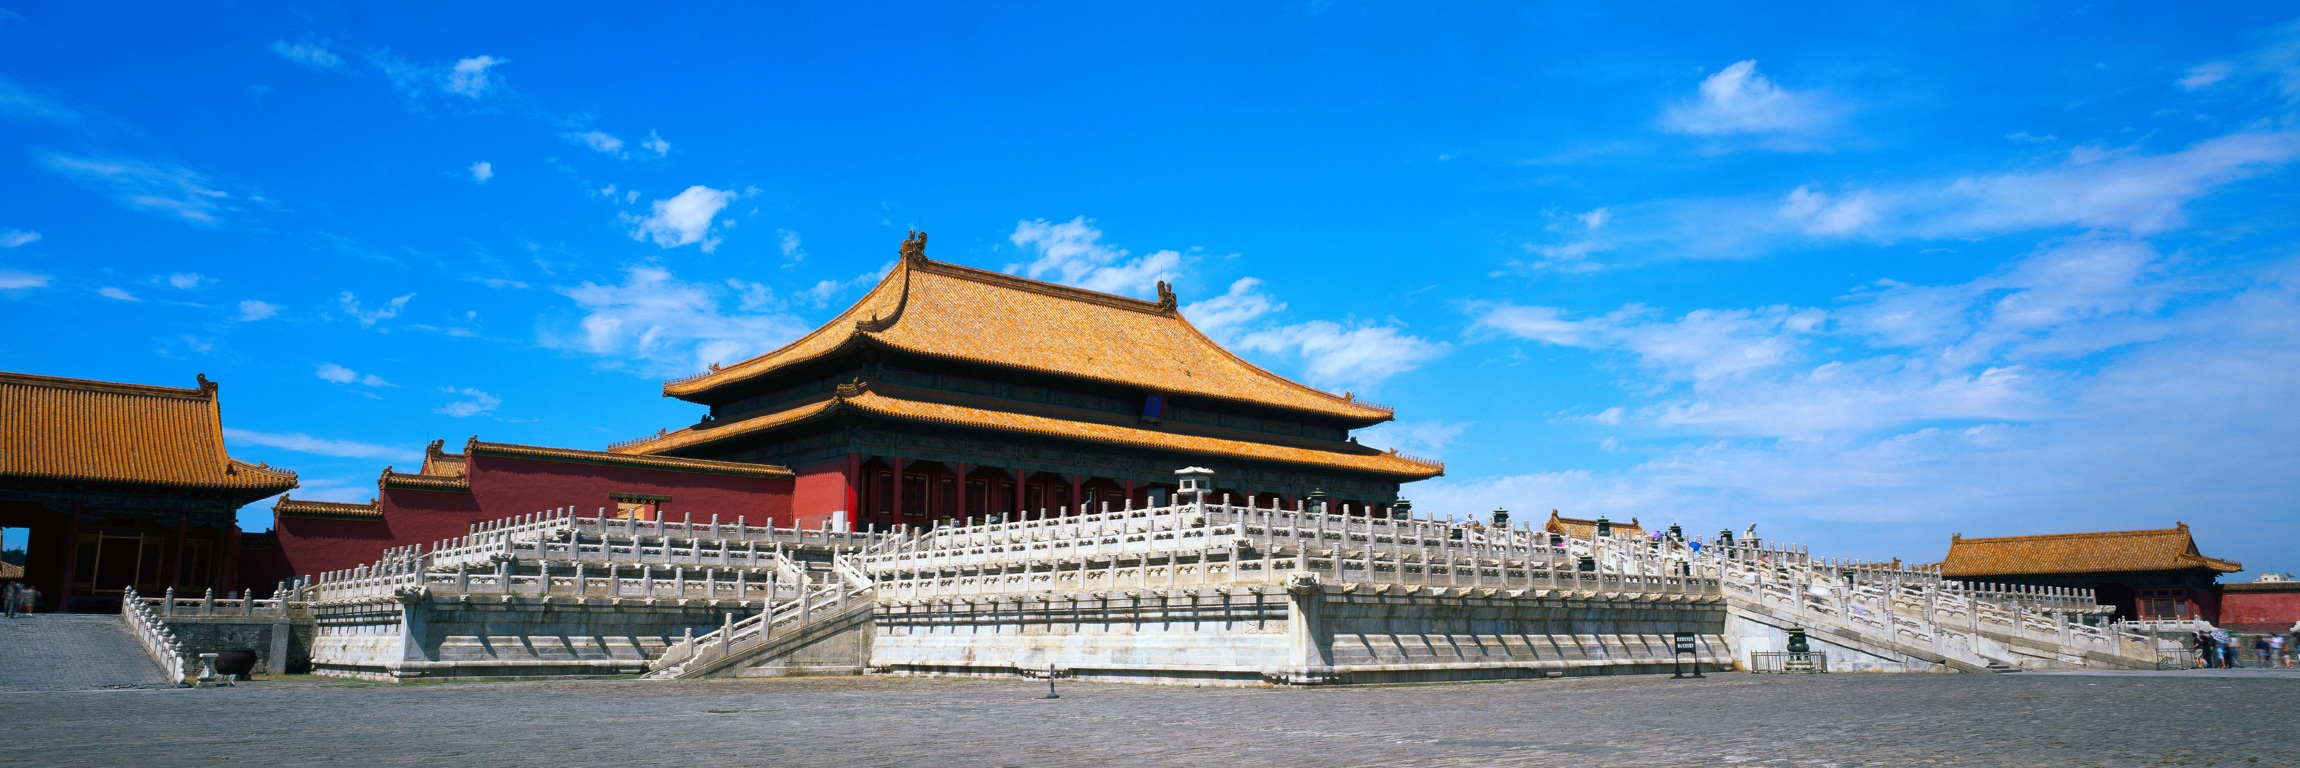 The Forbidden City Wallpaper